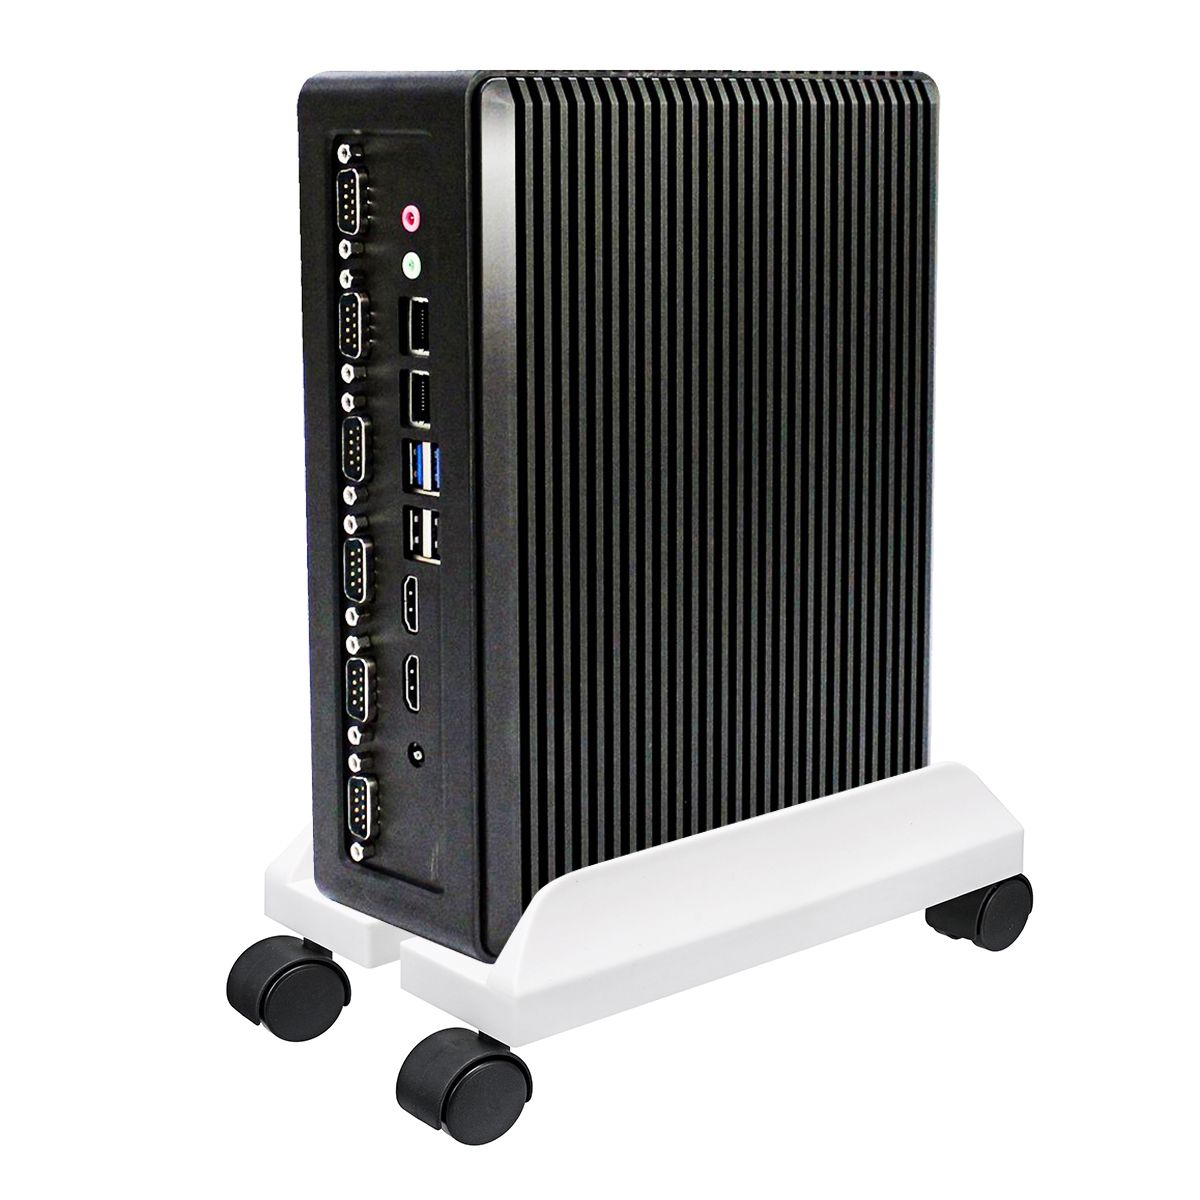 PC-Case-Desktop-CPU-Stand-Computer-Case-Holder-Computer-Tower-Adjustable-Rolling-Wheels-1634088